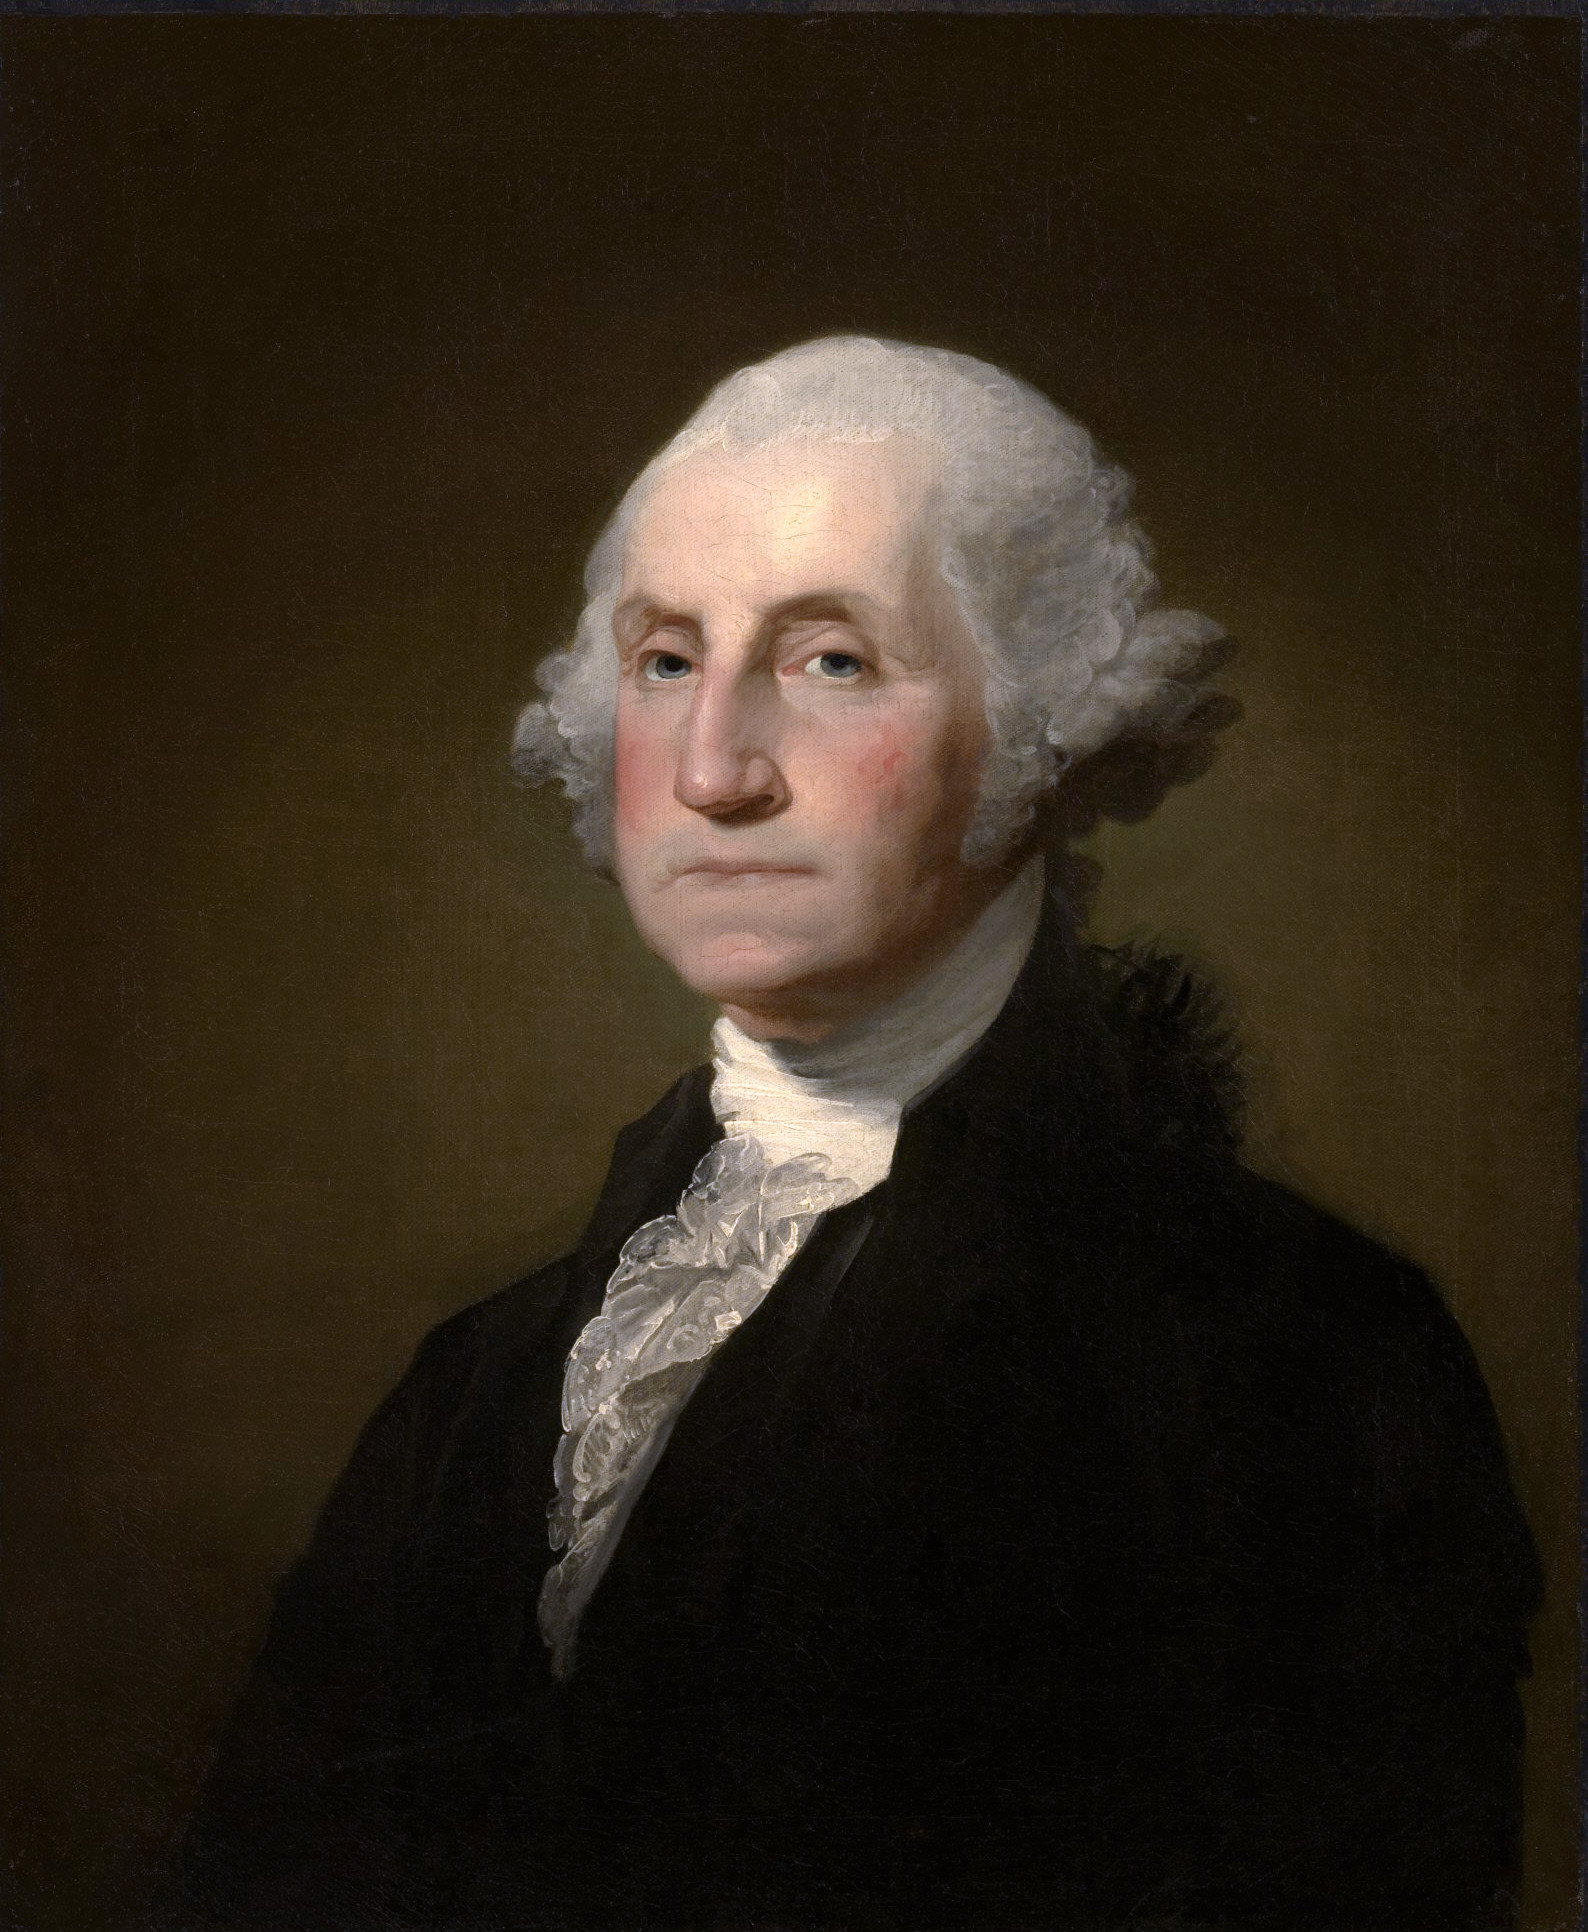 https://upload.wikimedia.org/wikipedia/commons/b/b6/Gilbert_Stuart_Williamstown_Portrait_of_George_Washington.jpg